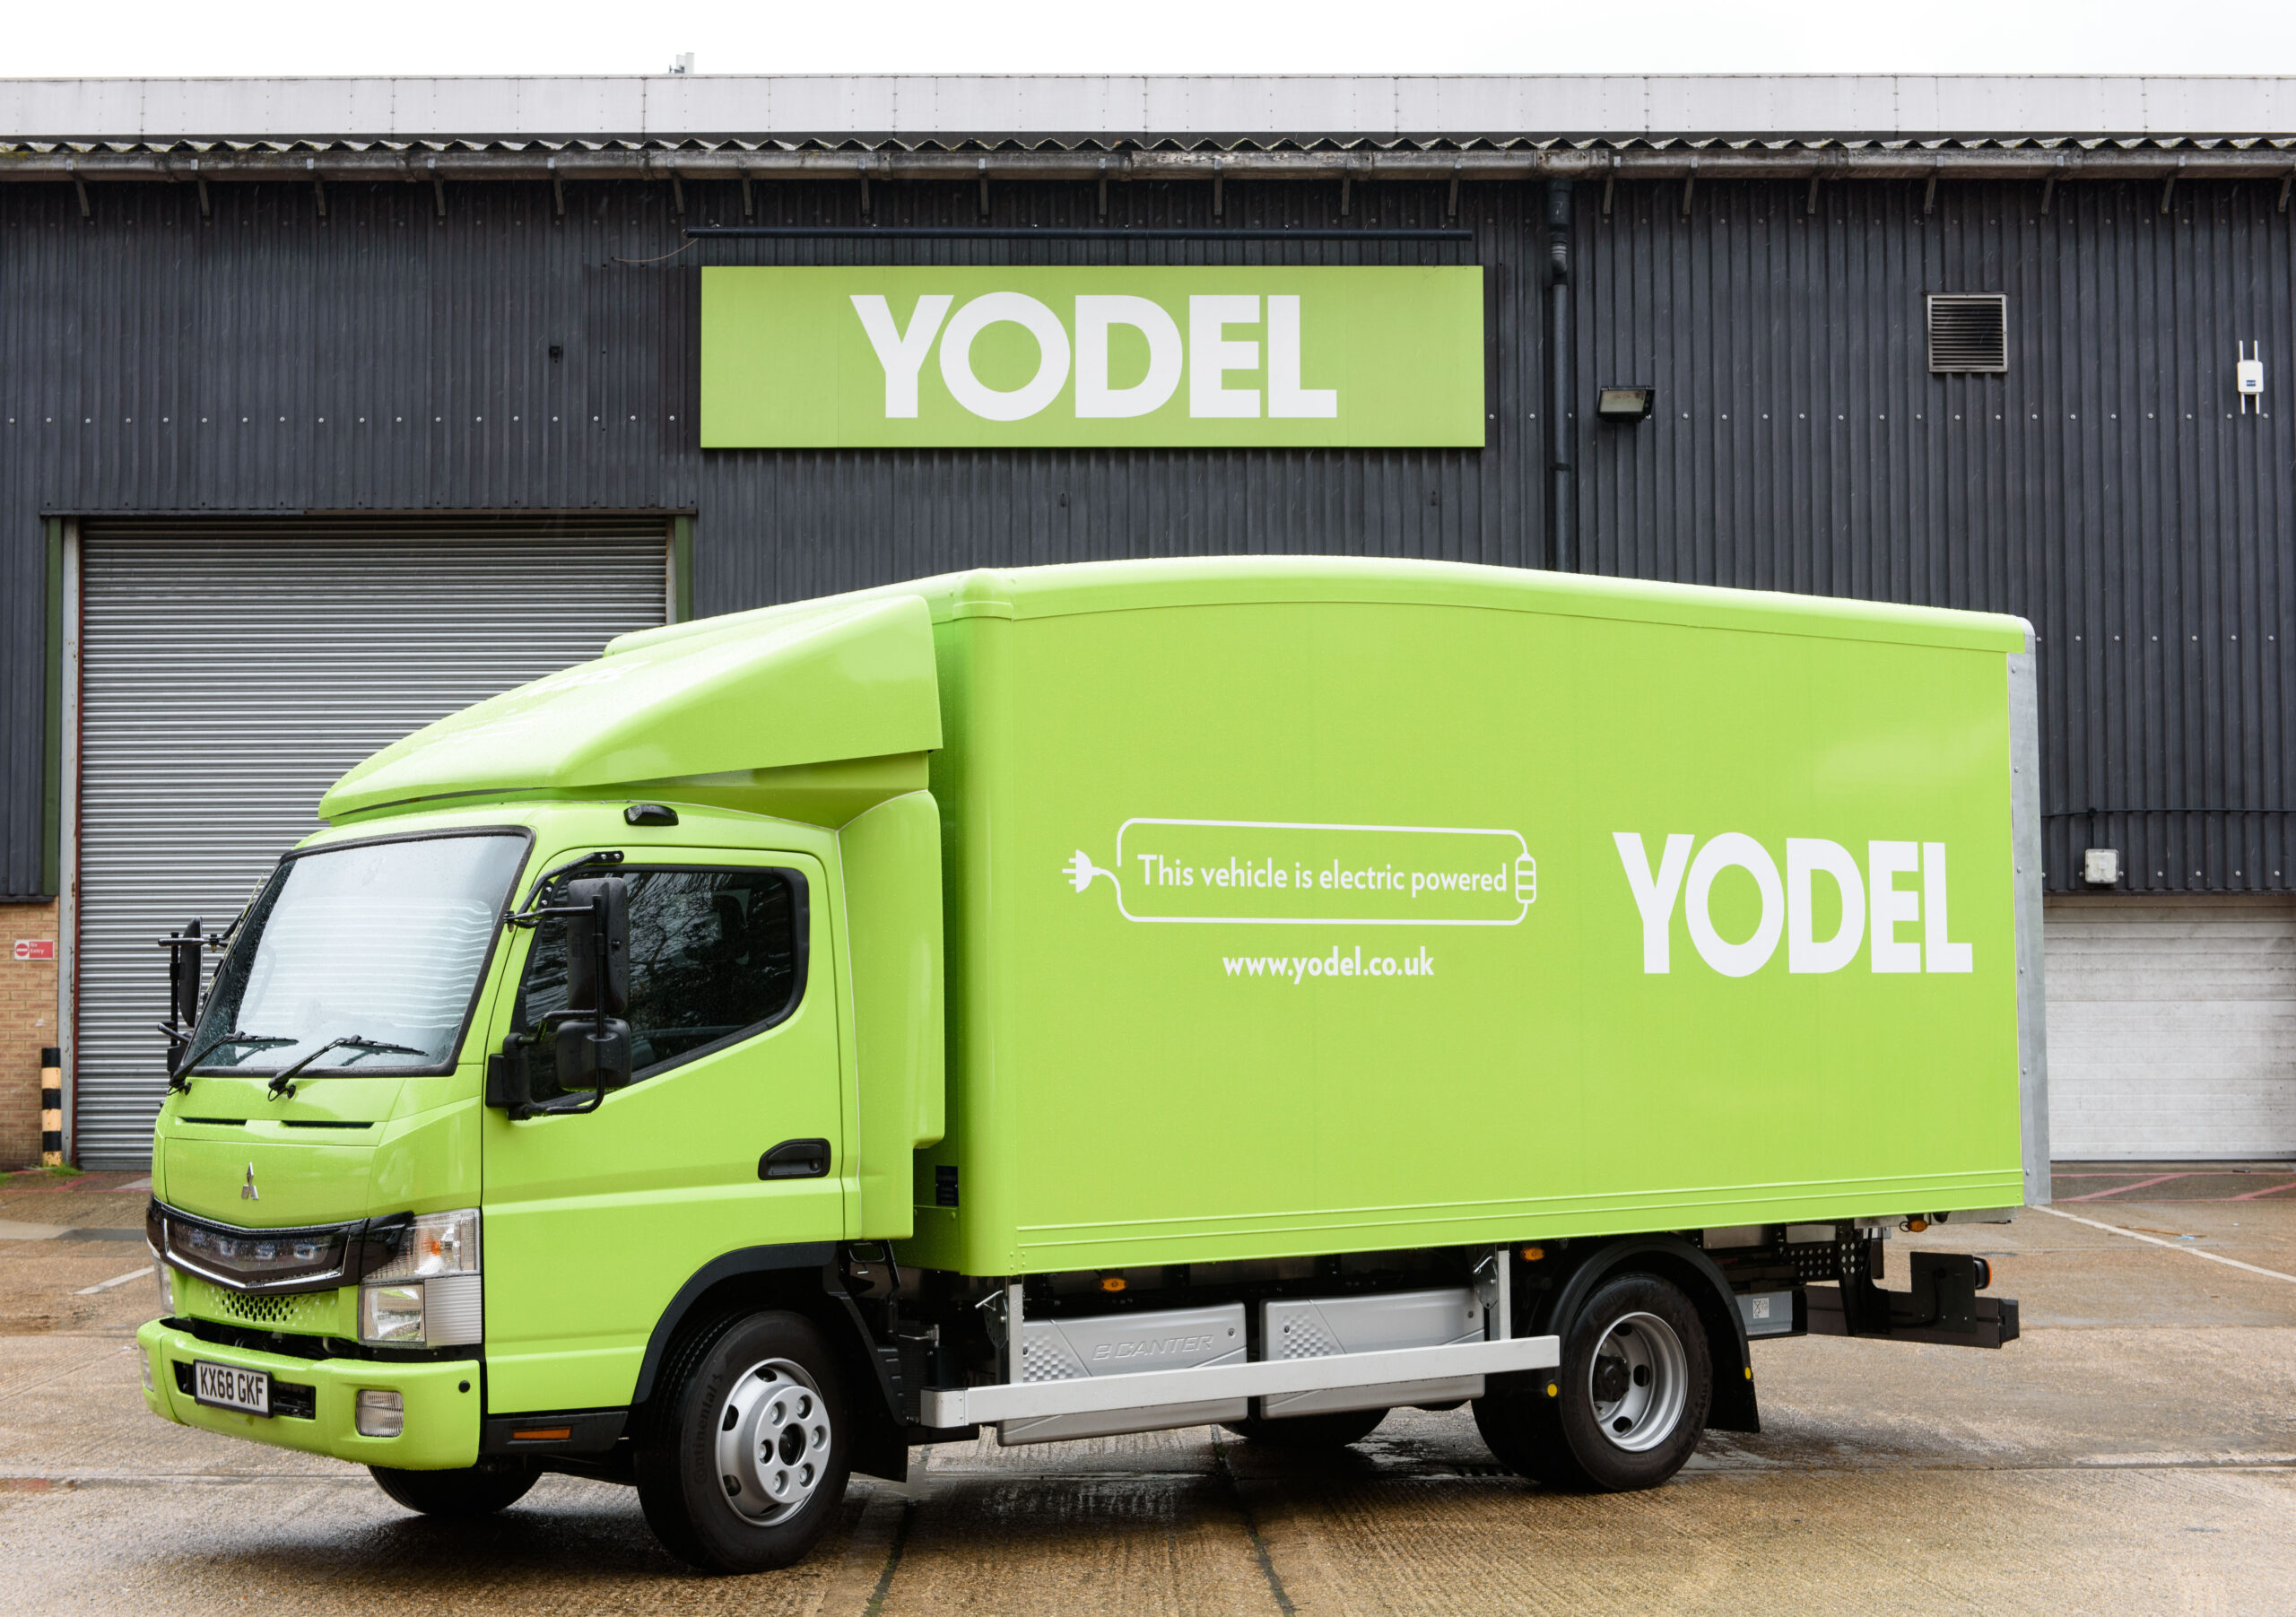 Yodel. Yodel (Company). Logistic Truck. Braue Tonne. Таке доставка